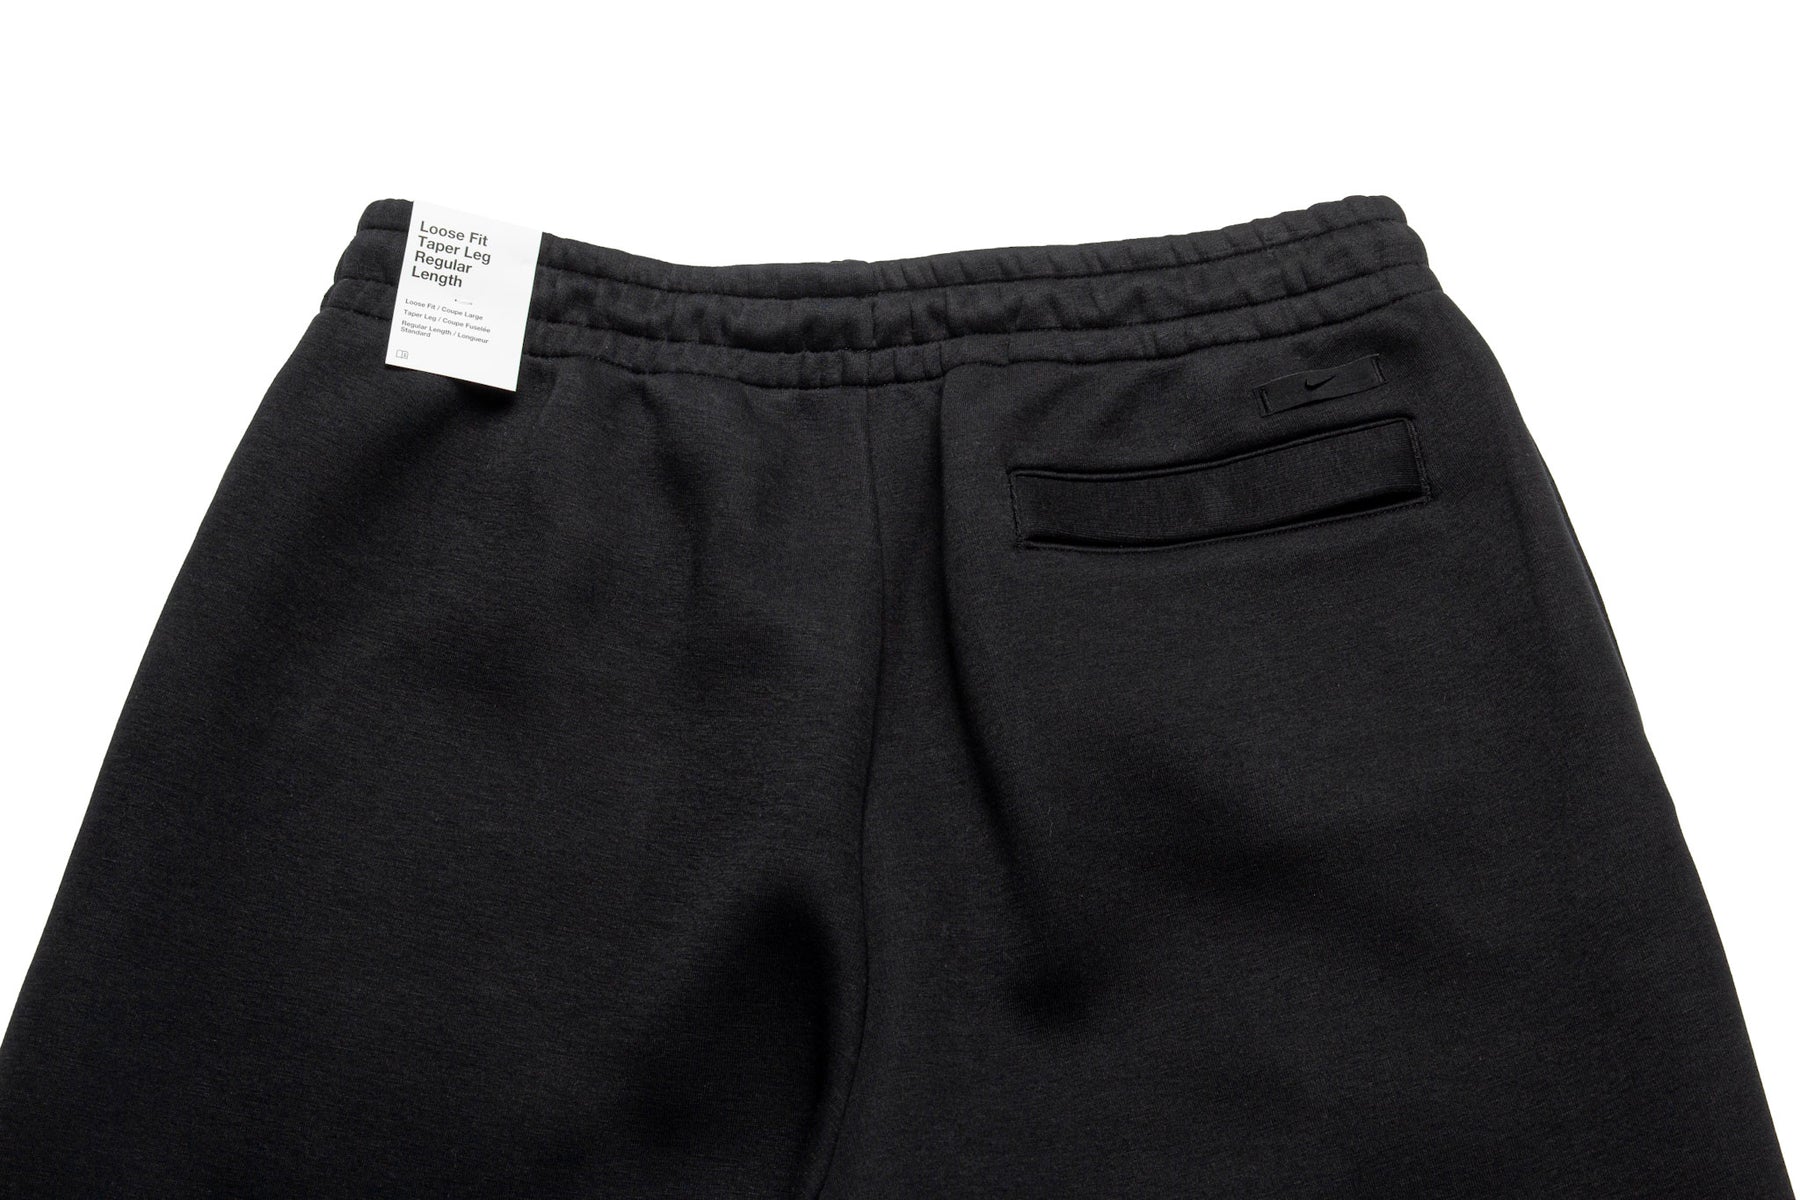 Nike Tech Fleece Reimagined Pants "Black"